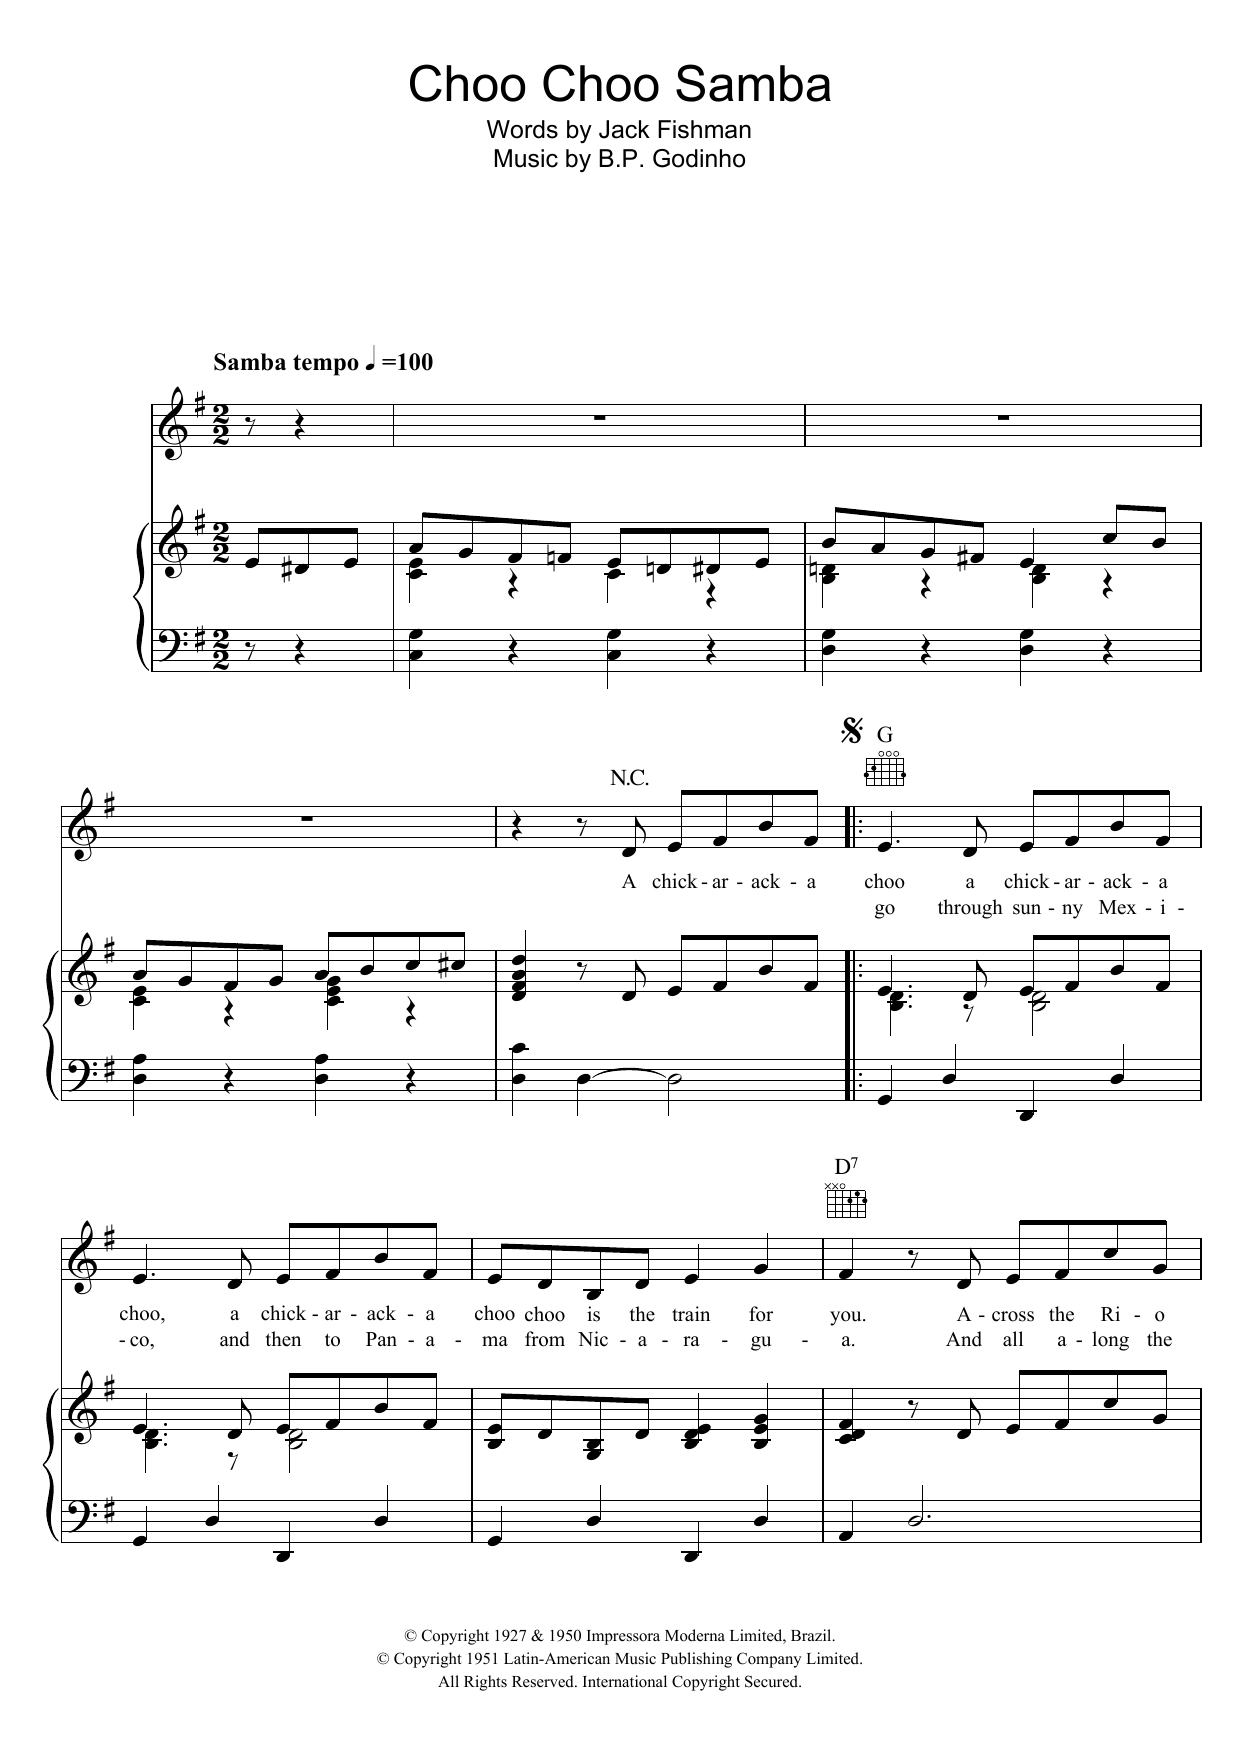 B.P. Godinho Choo Choo Samba Sheet Music Notes & Chords for Piano, Vocal & Guitar (Right-Hand Melody) - Download or Print PDF